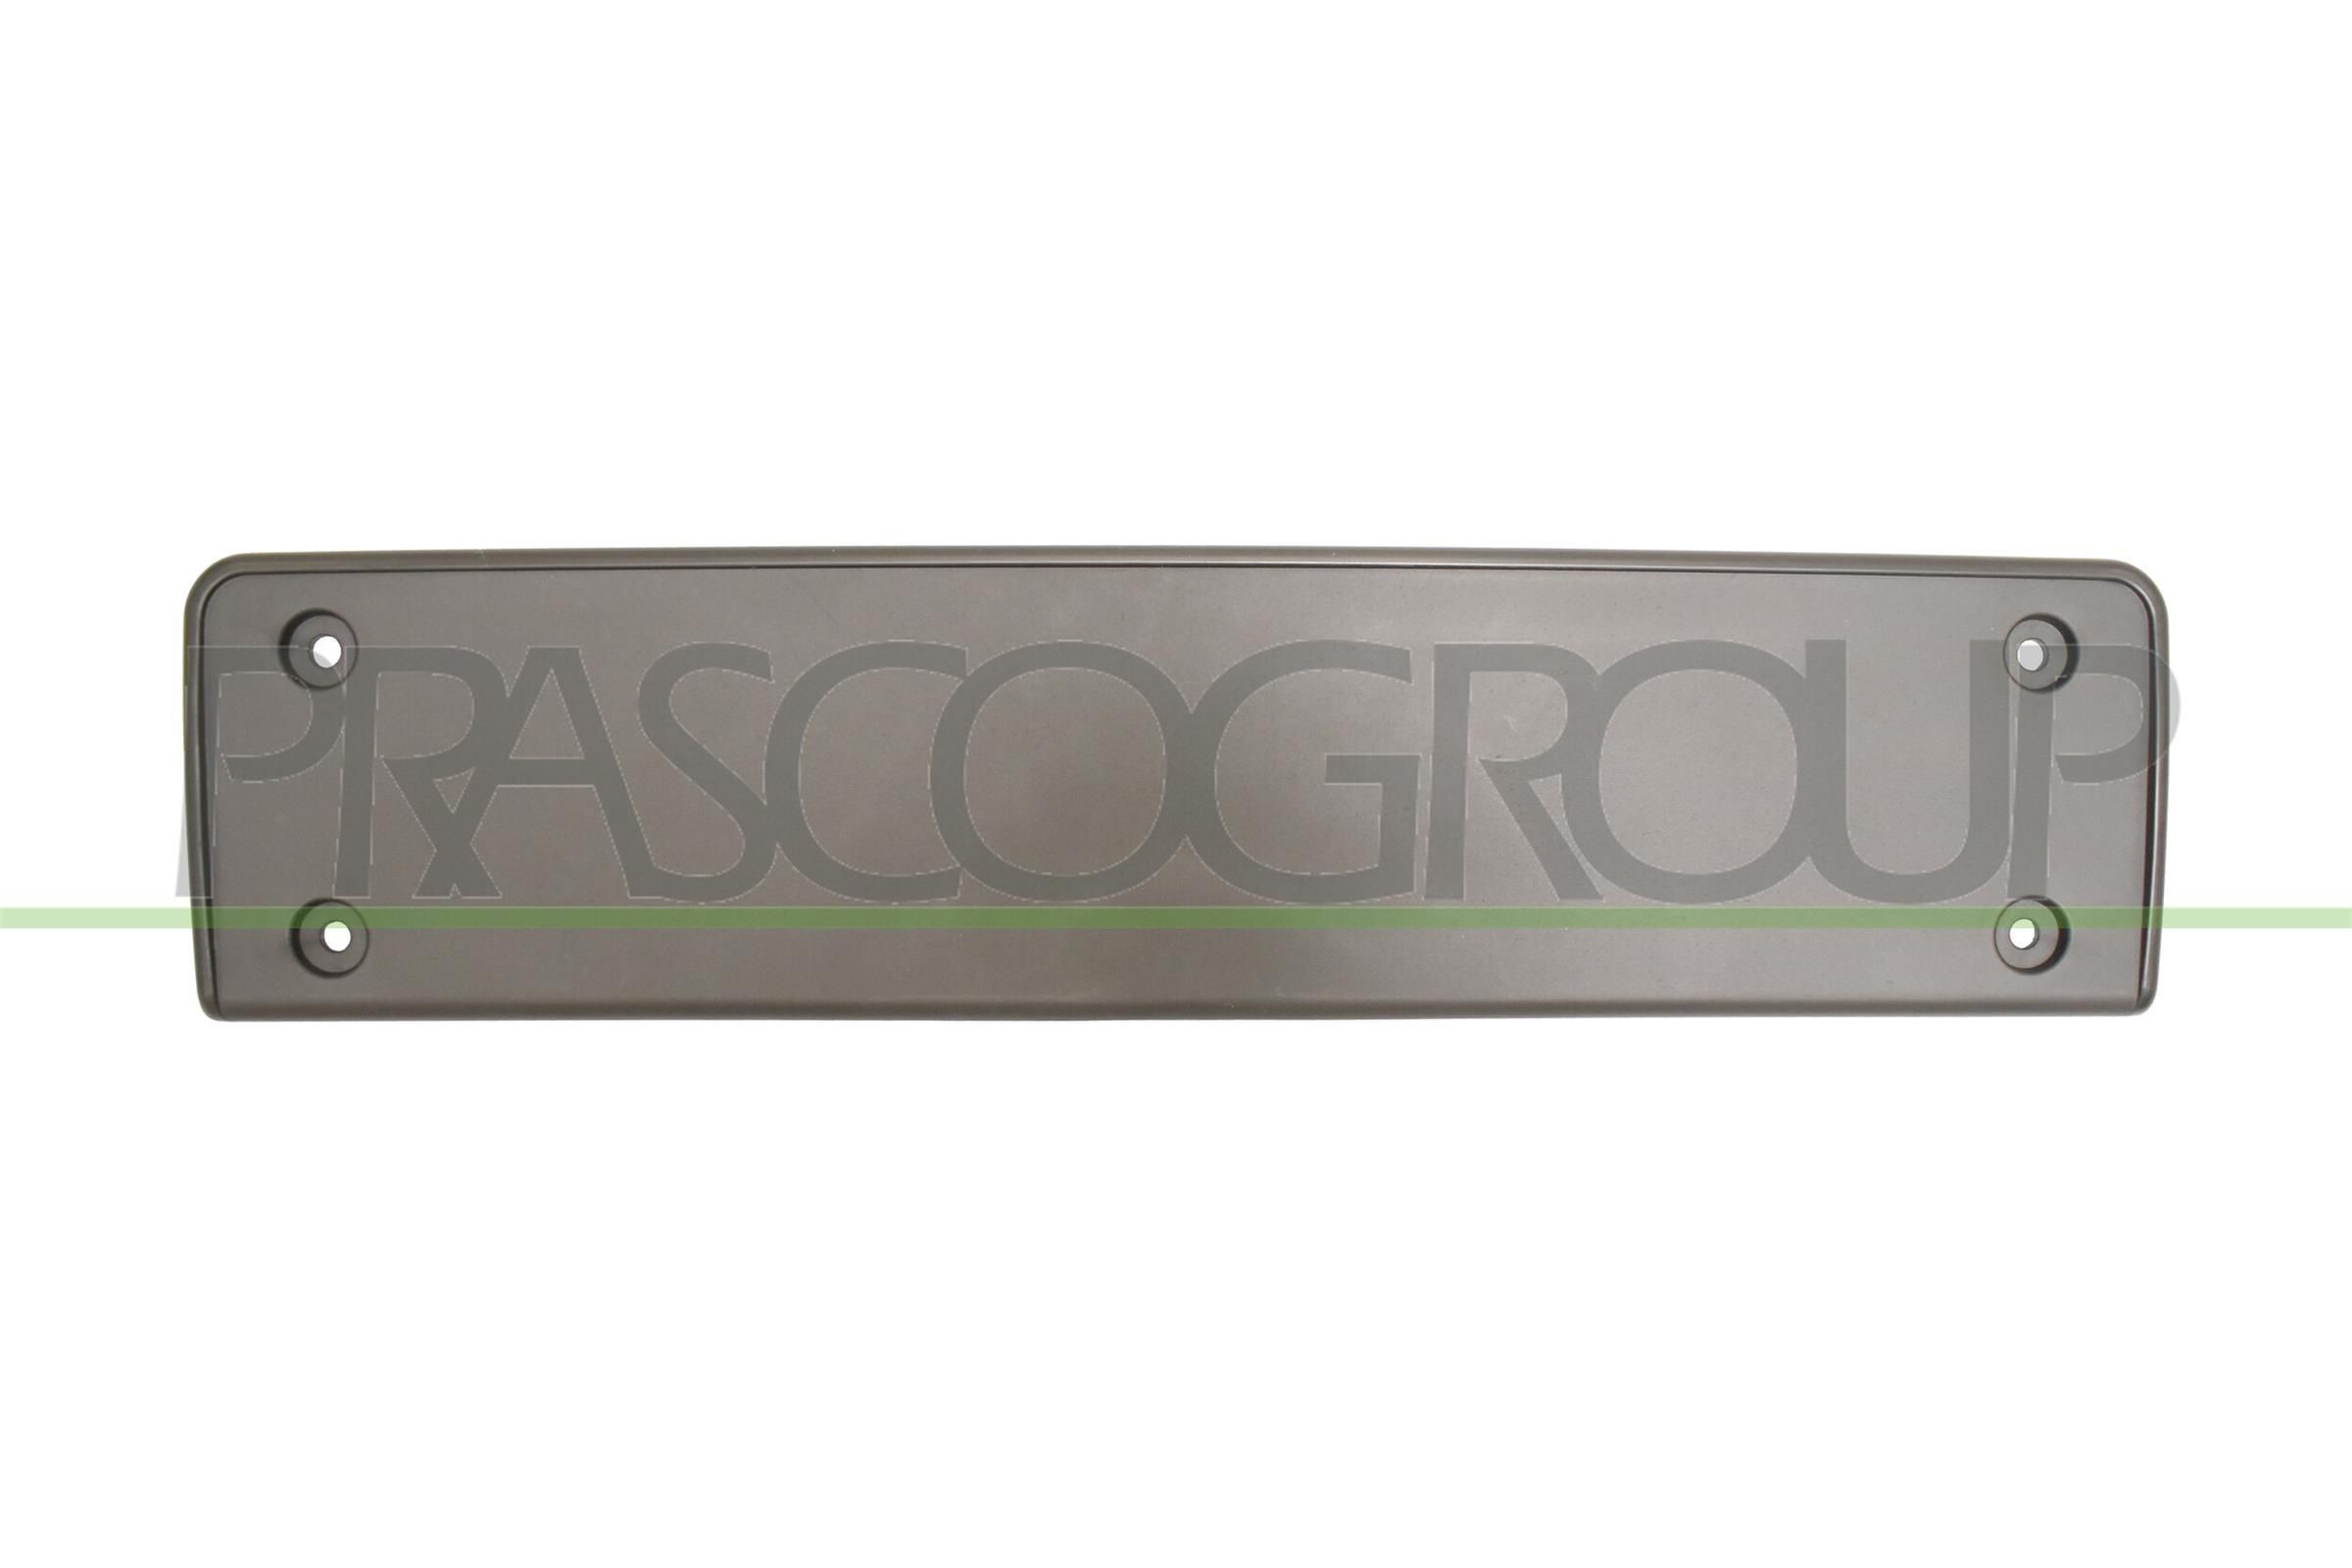 Original VG0551539 PRASCO Licence plate holder / bracket experience and price